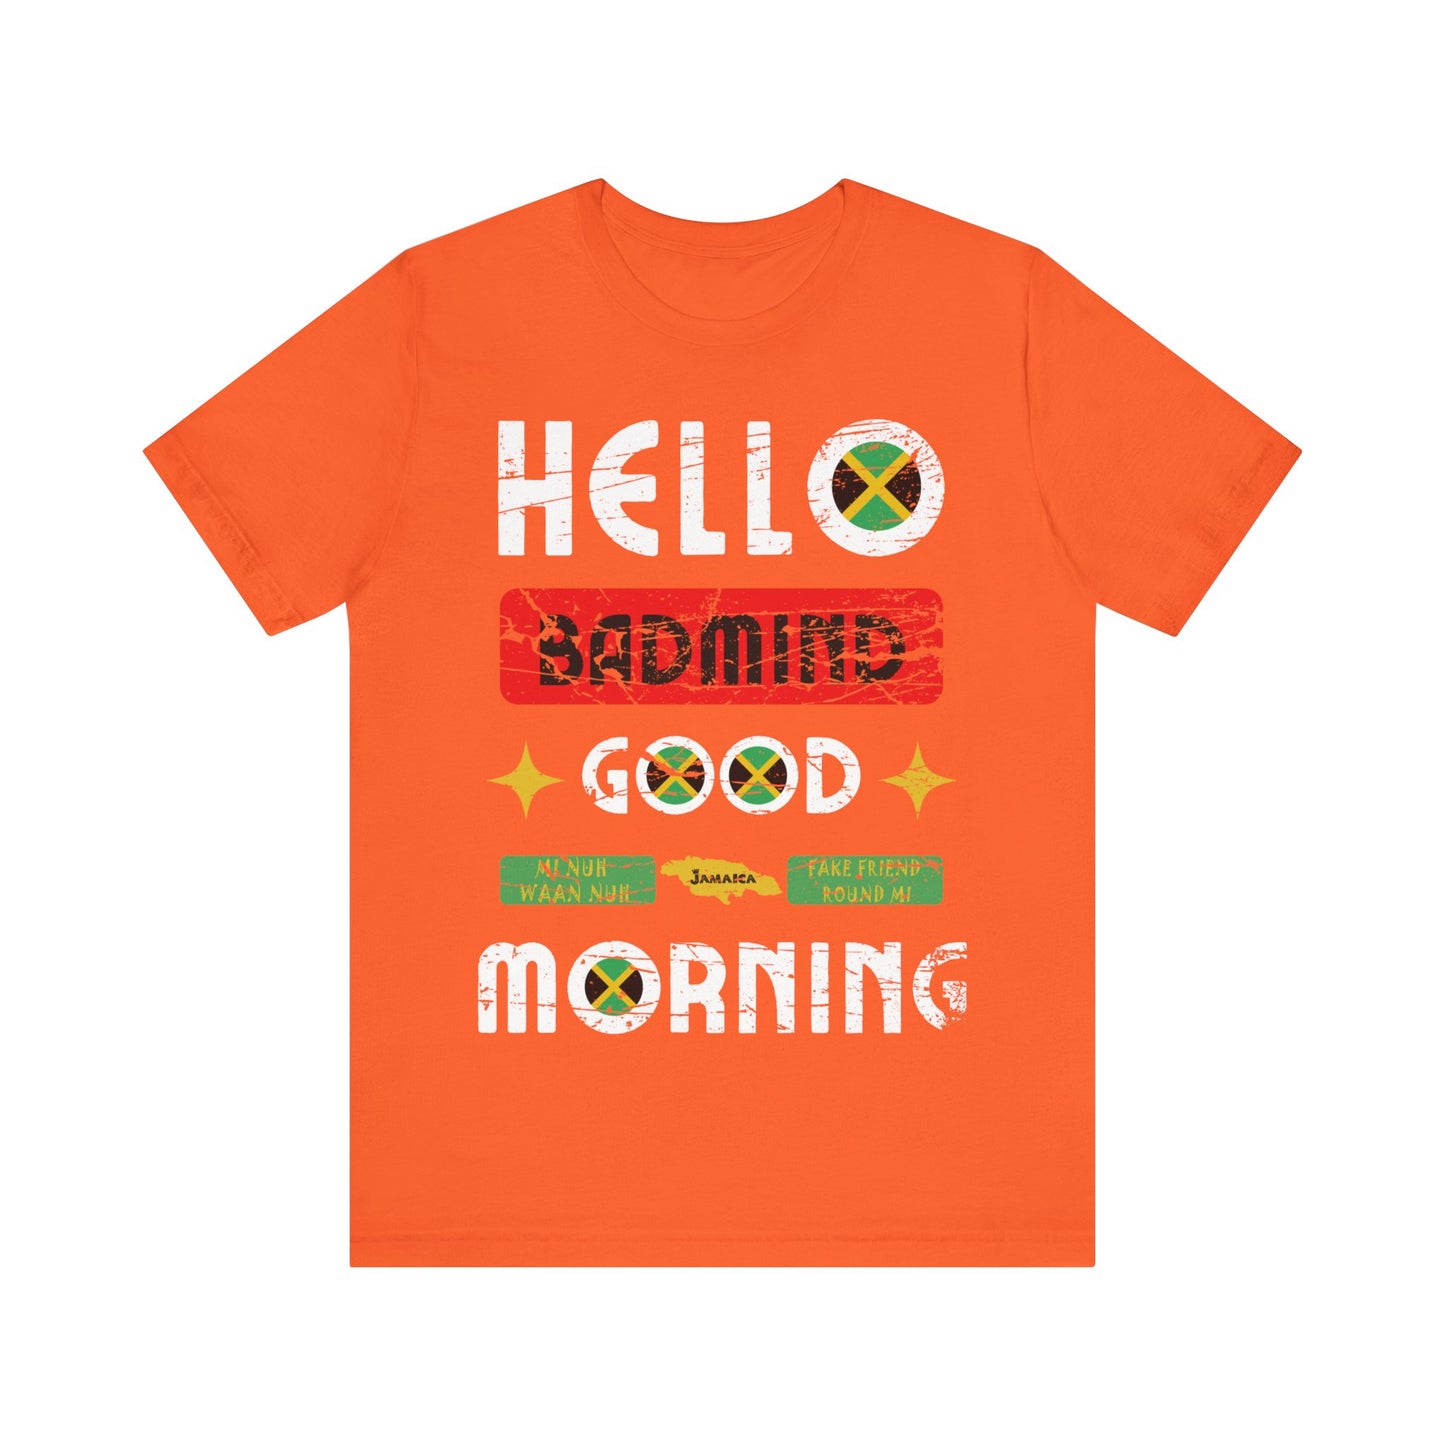 Jamaica Shirt - Hello Badmind, Good Morning Jamaica